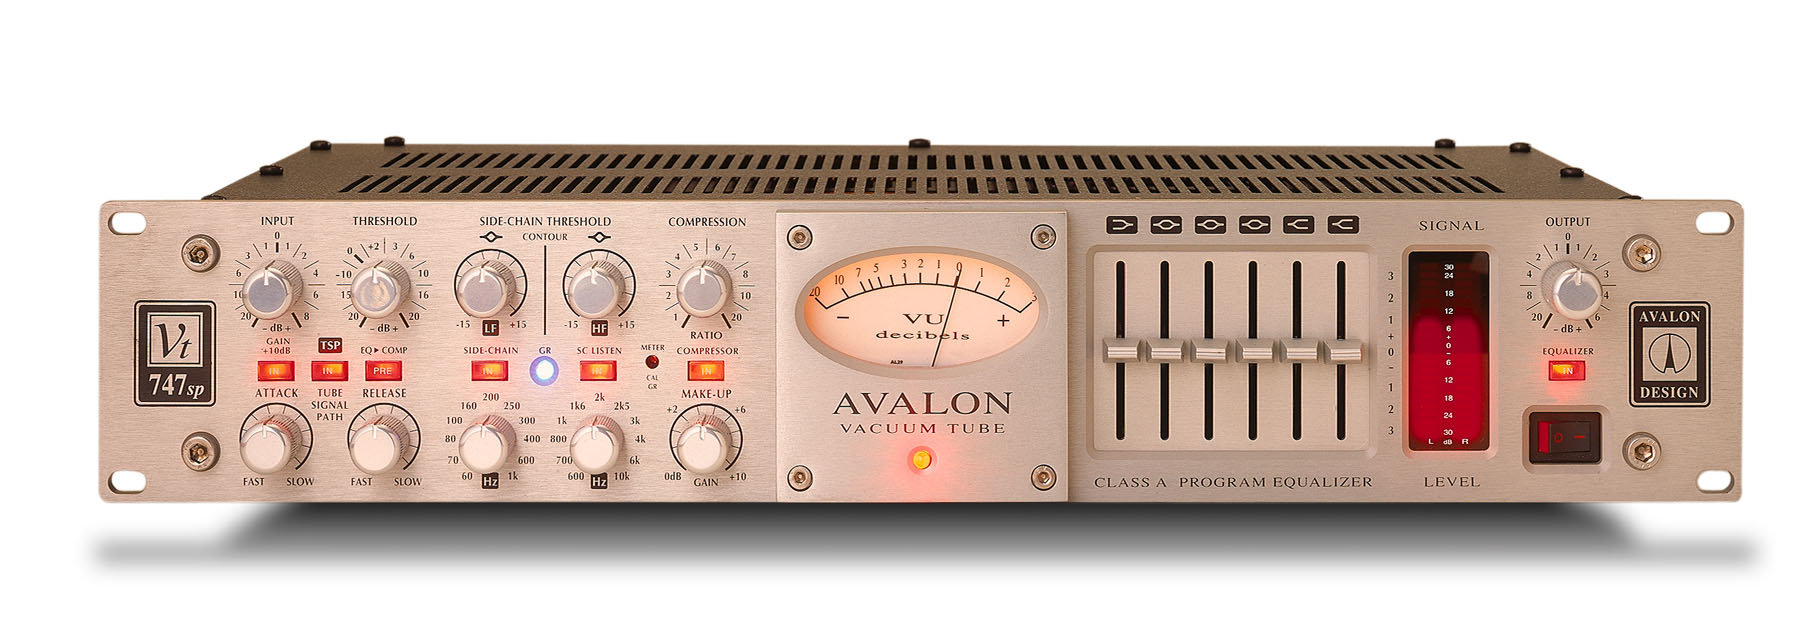 Avalon Design VT-747sp